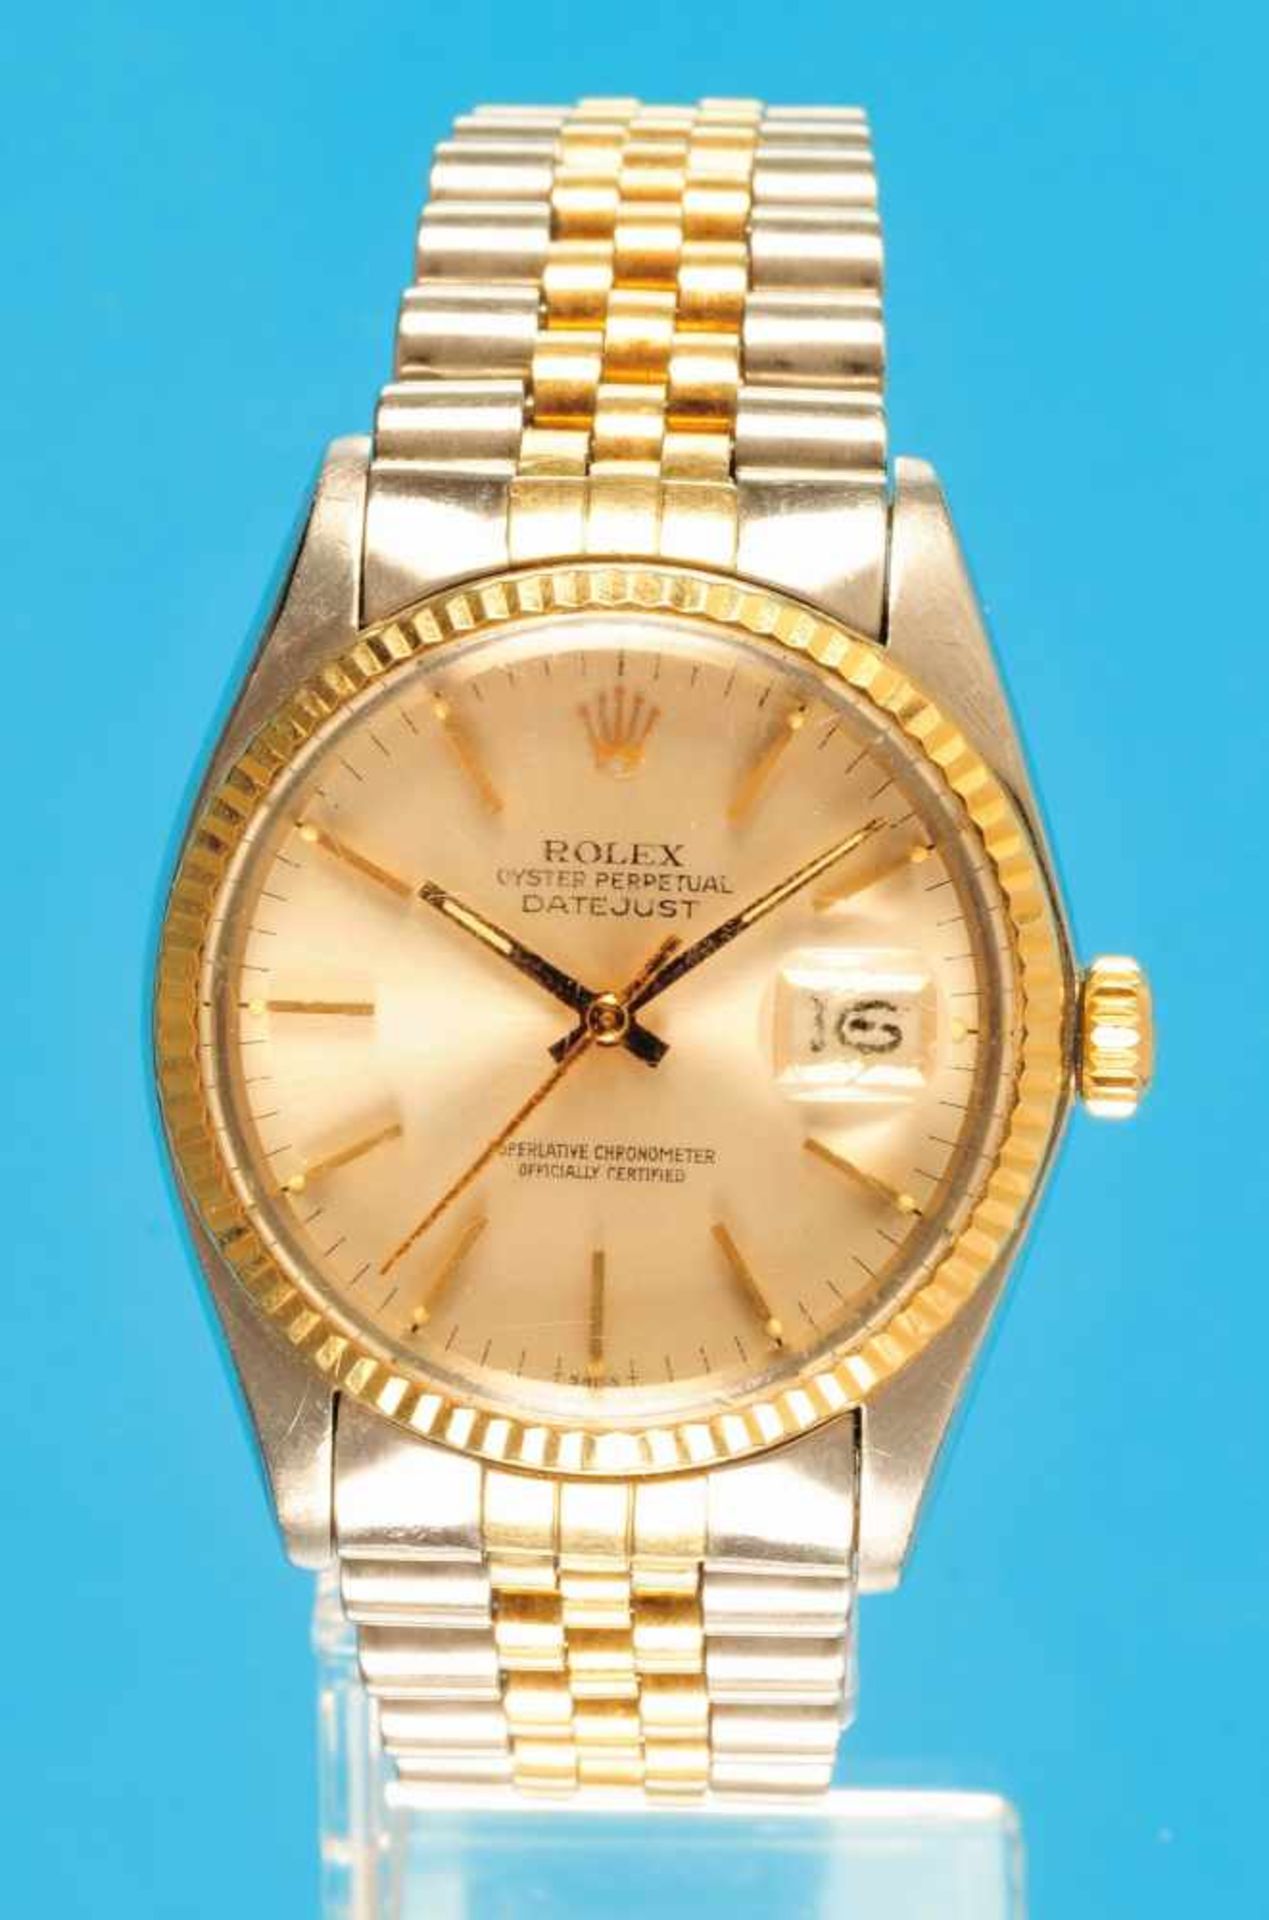 Steel golden wristwatch with steel golden wristband, Rolex oyster Perpetual Datejust, Superlative